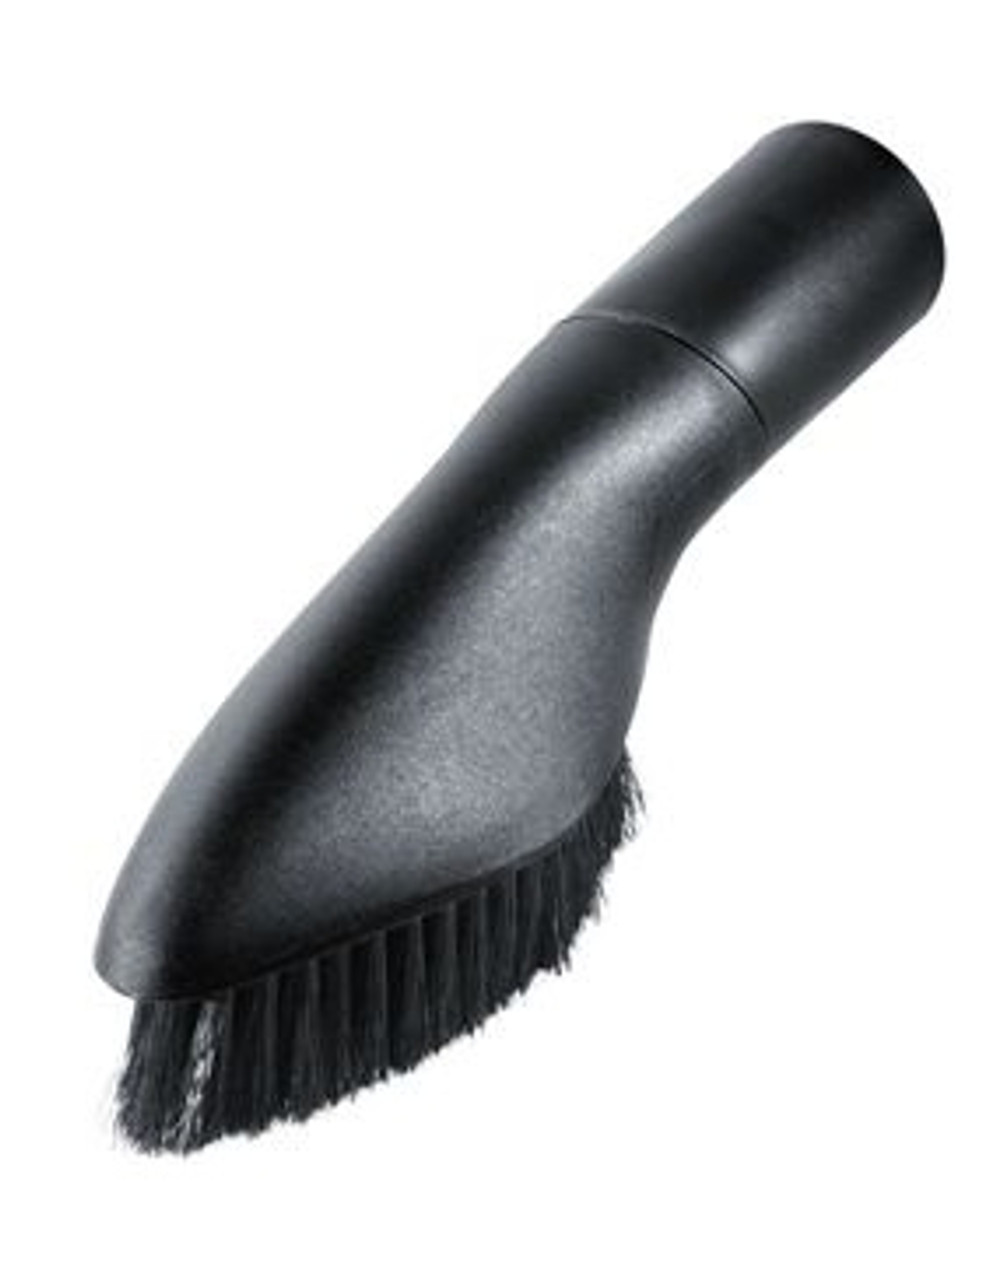 Festool Plastic Universal Brush Nozzle